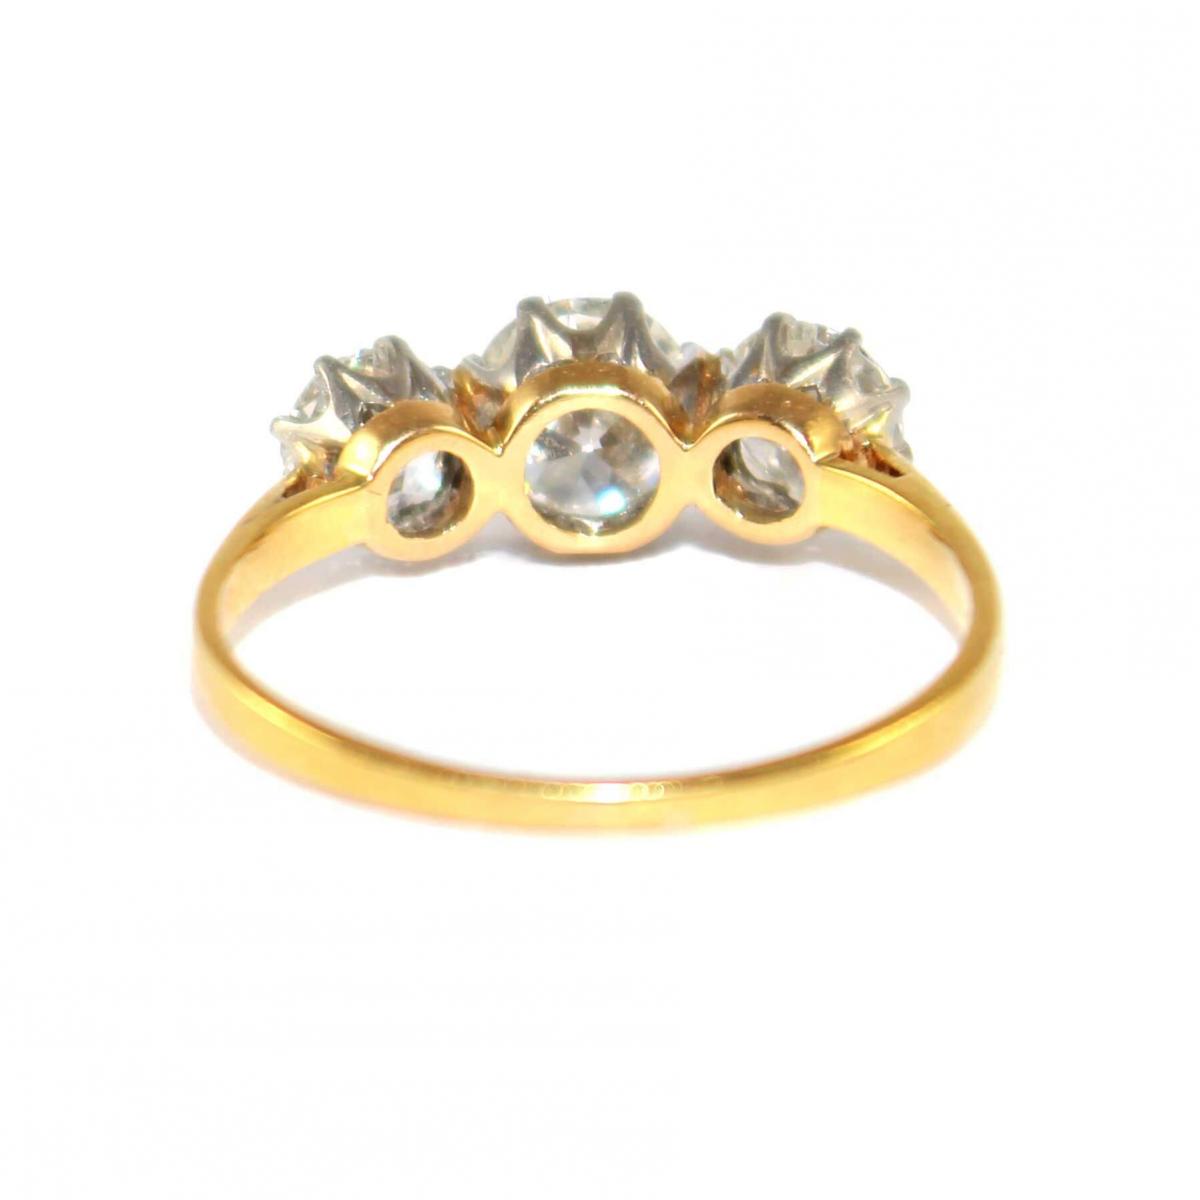 Edwardian Old-Cut Diamond 3 Stone Ring c.1920